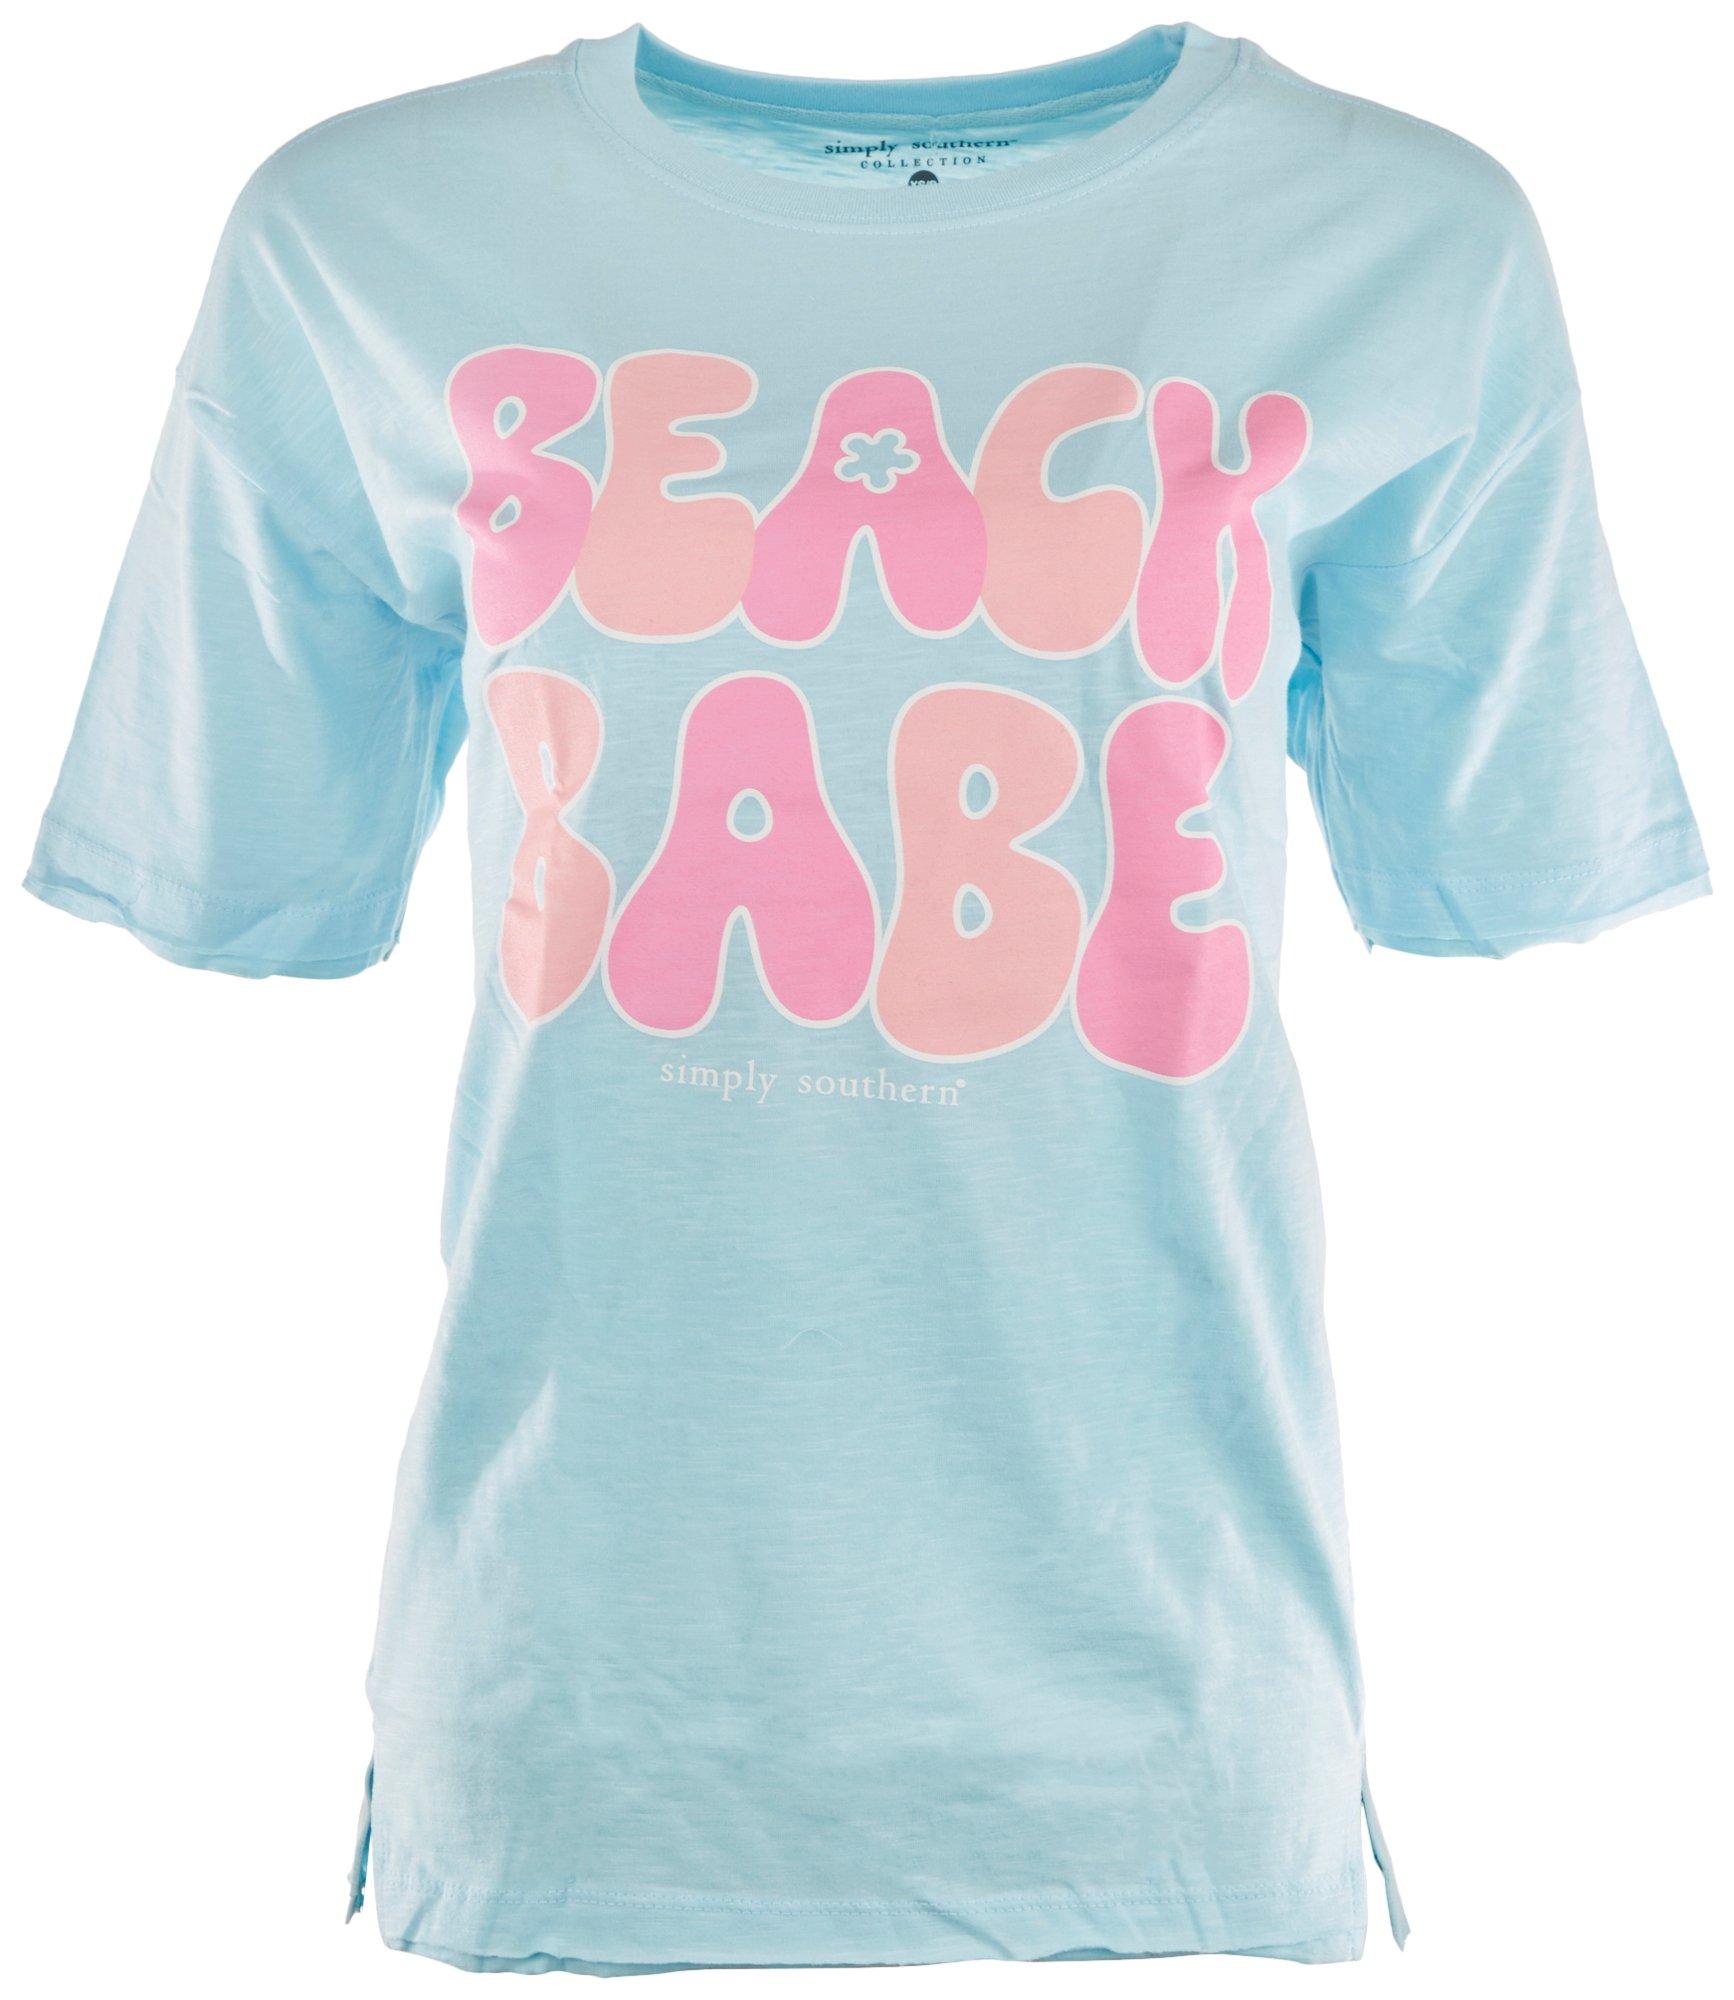 Juniors Beach Babe T-Shirt